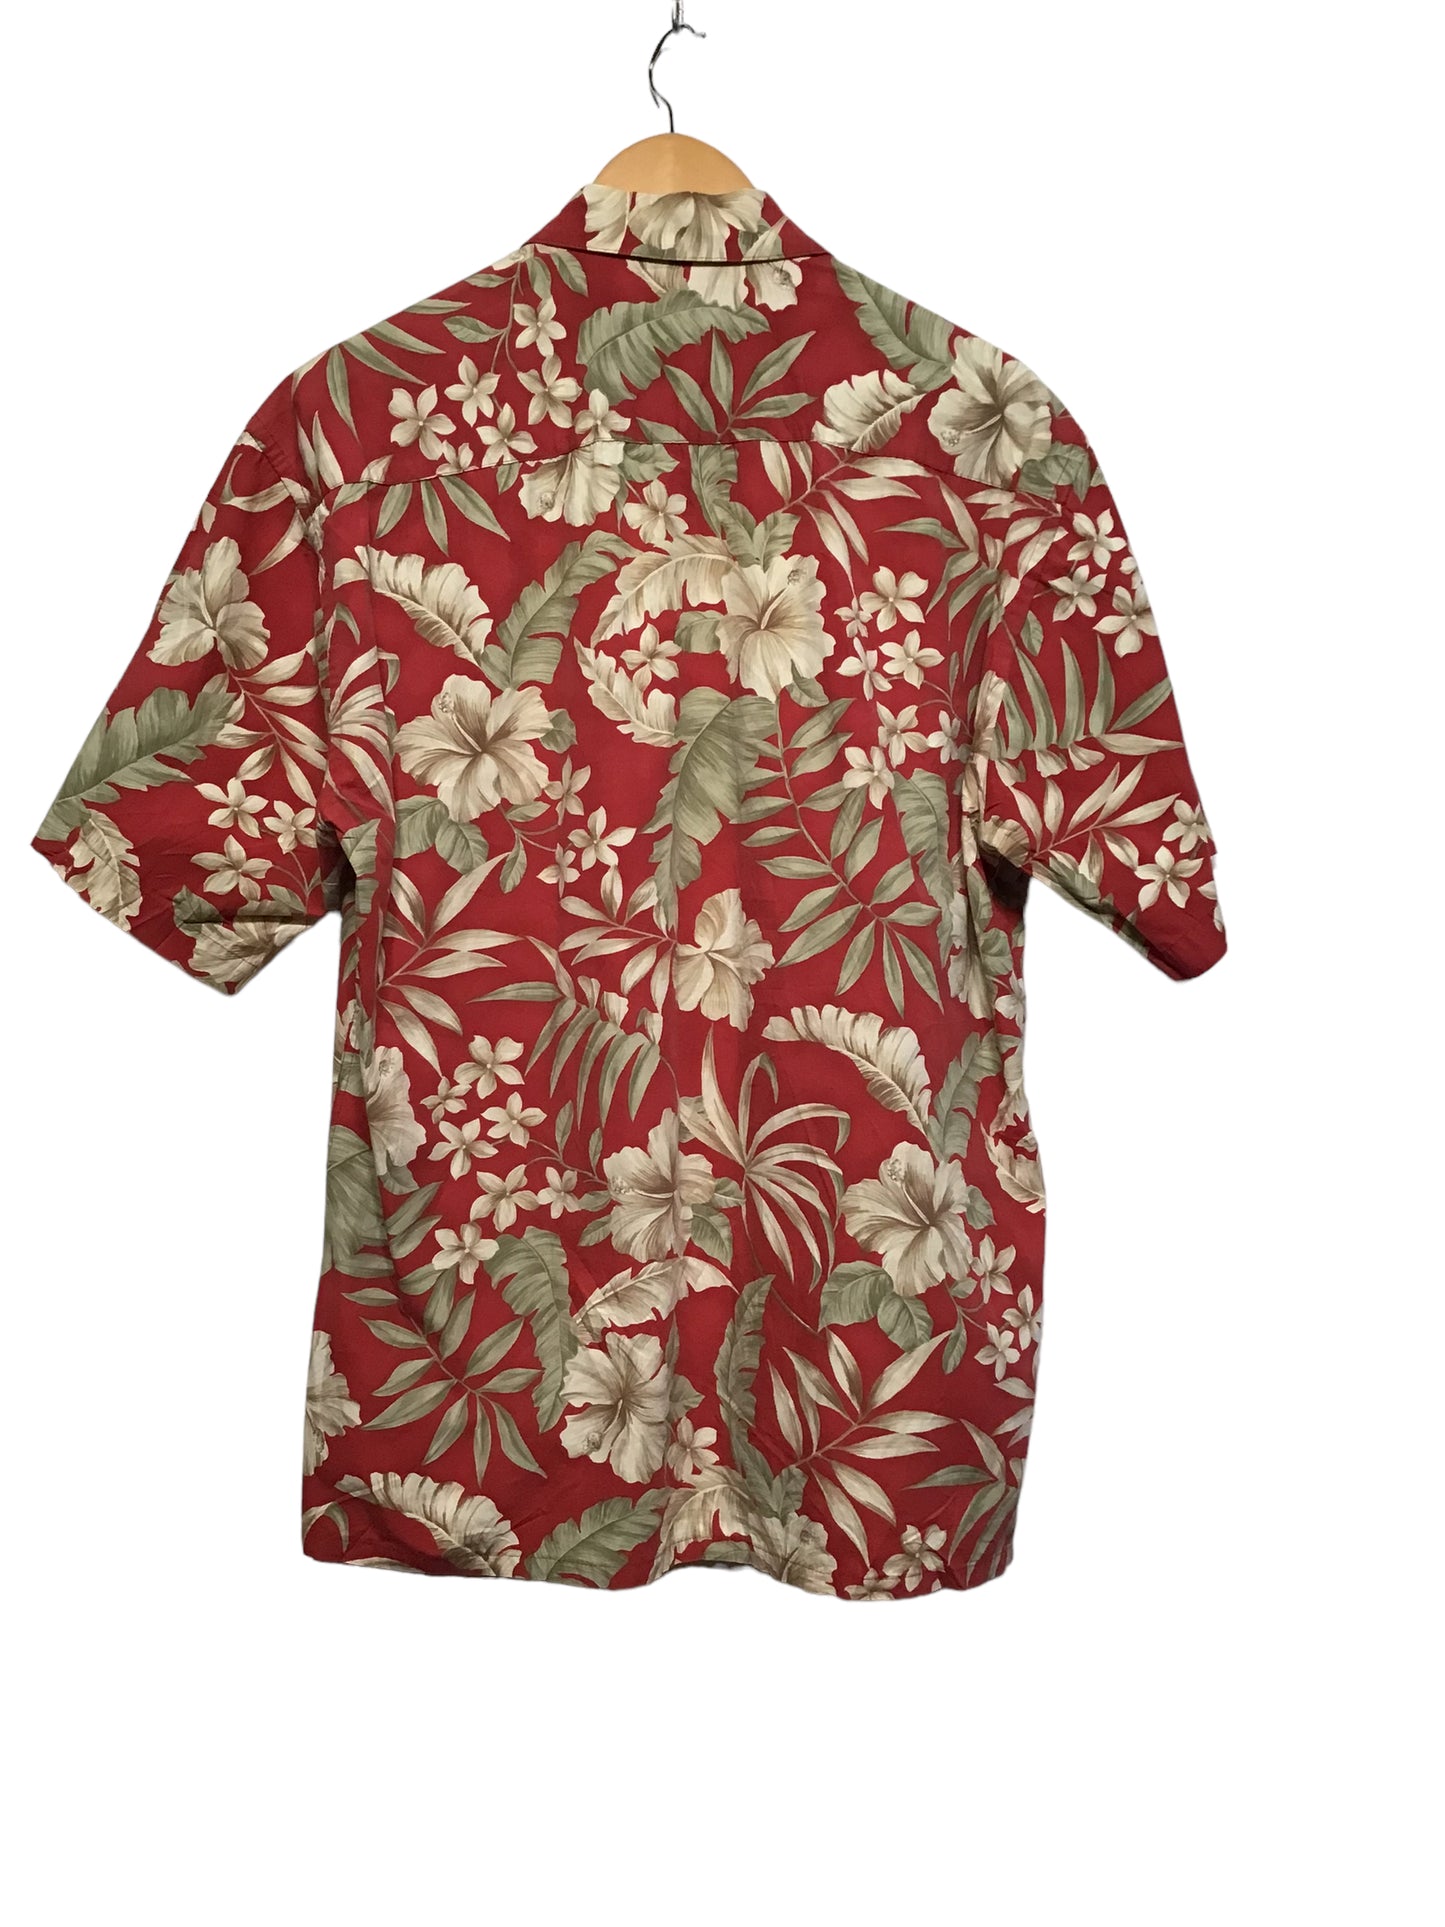 Pierre Cardin Shirt (Size L)